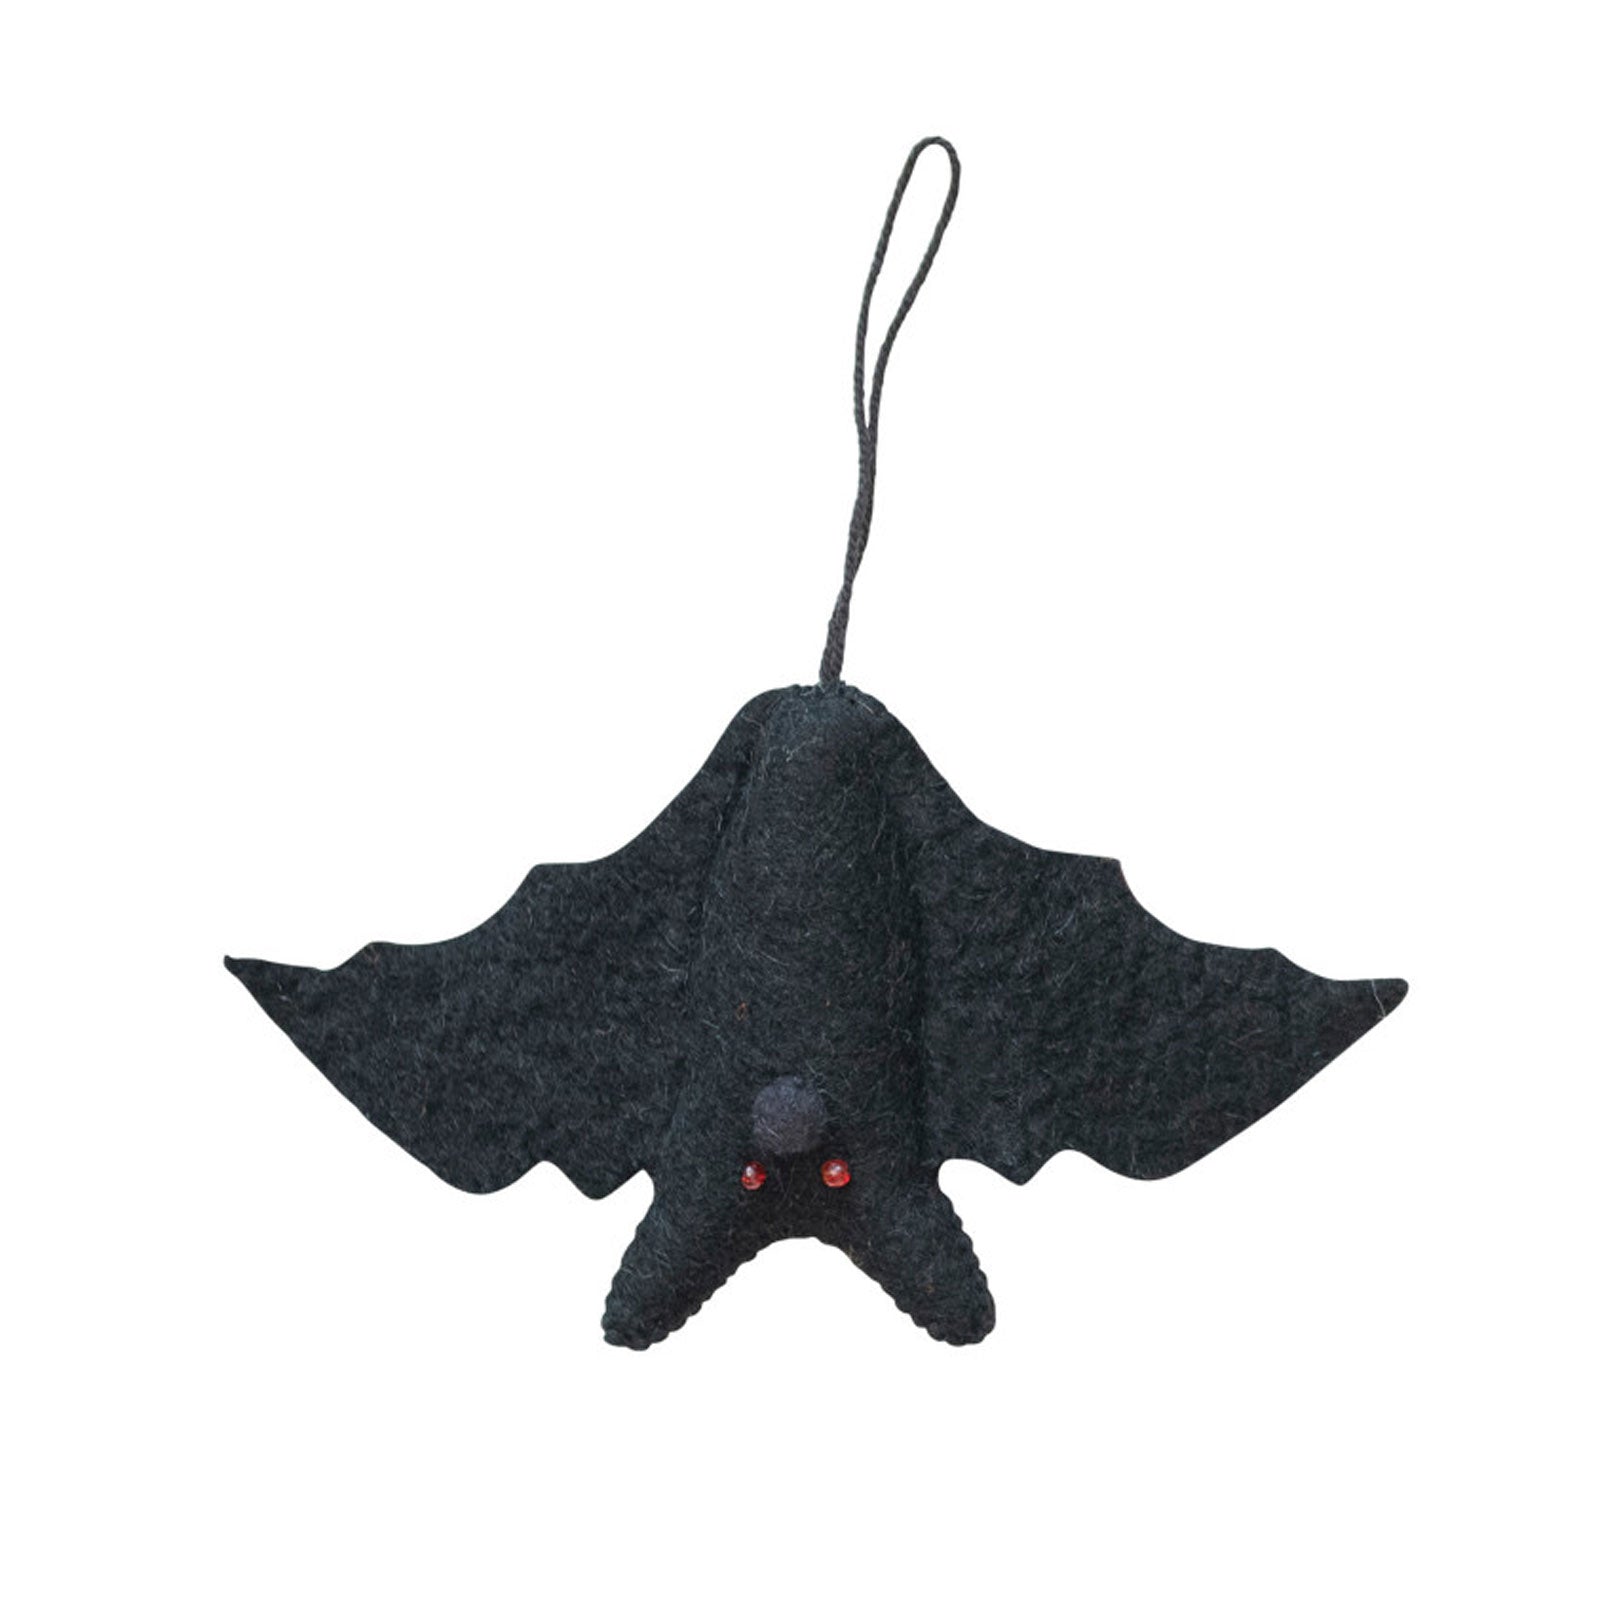 Creative Co-op Wool Felt Bat Ornament - Black - 7.5" x 4.5"